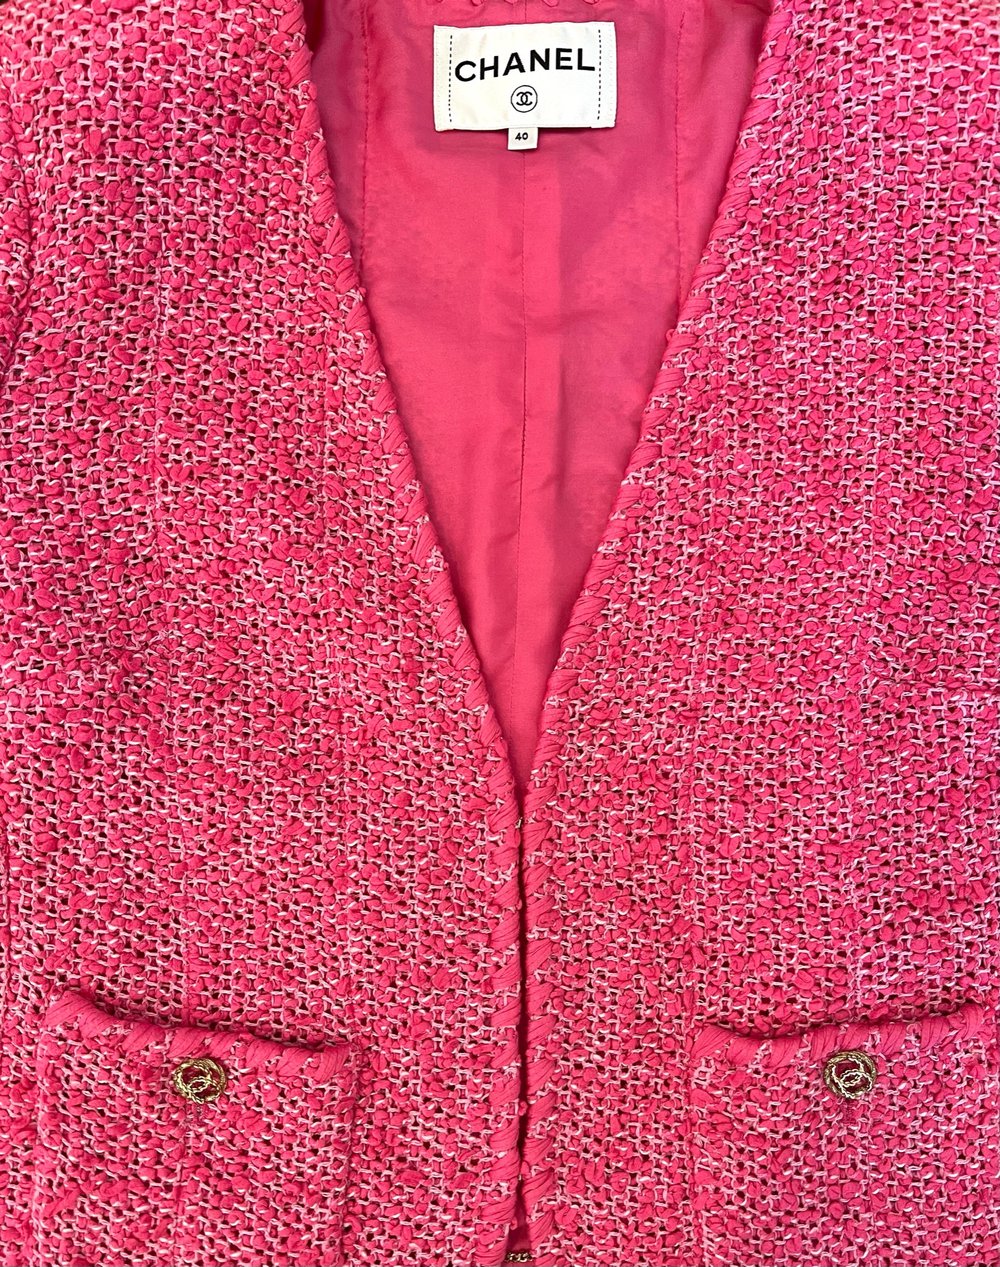 Chanel Bougainvillea Pink Tweed Jacket Cruise 20/21 Size 40